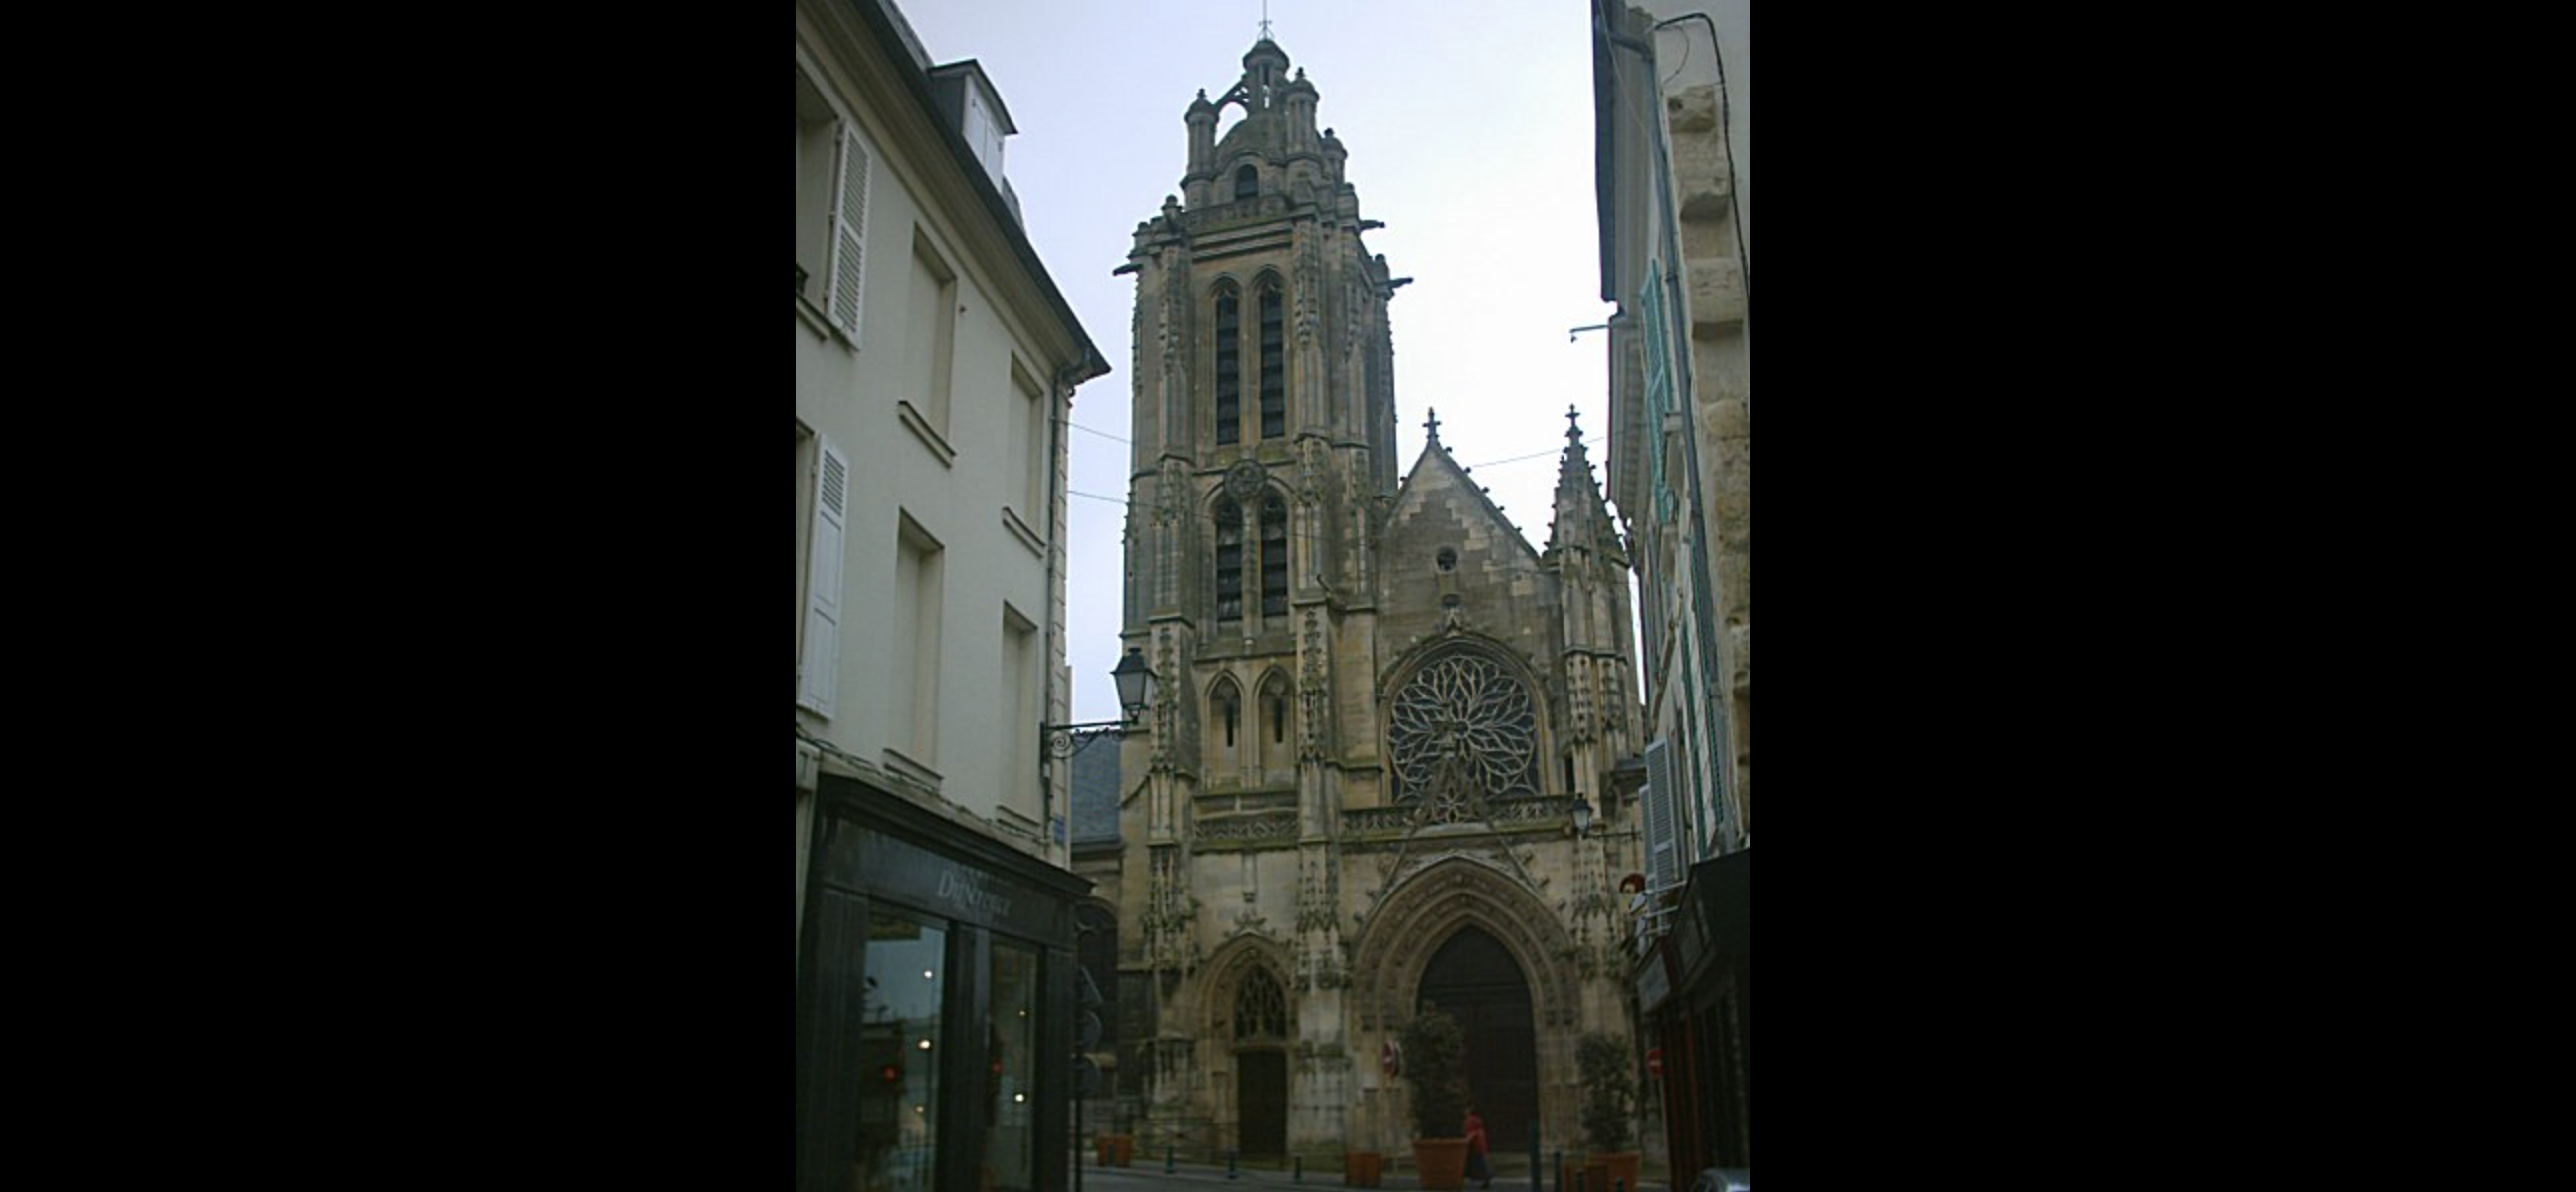 Katedra w Pontoise, fot. By Gregory Deryckère - http://www.smokefilledroom.co.uk, CC BY 2.5, https://commons.wikimedia.org/w/index.php?curid=620743